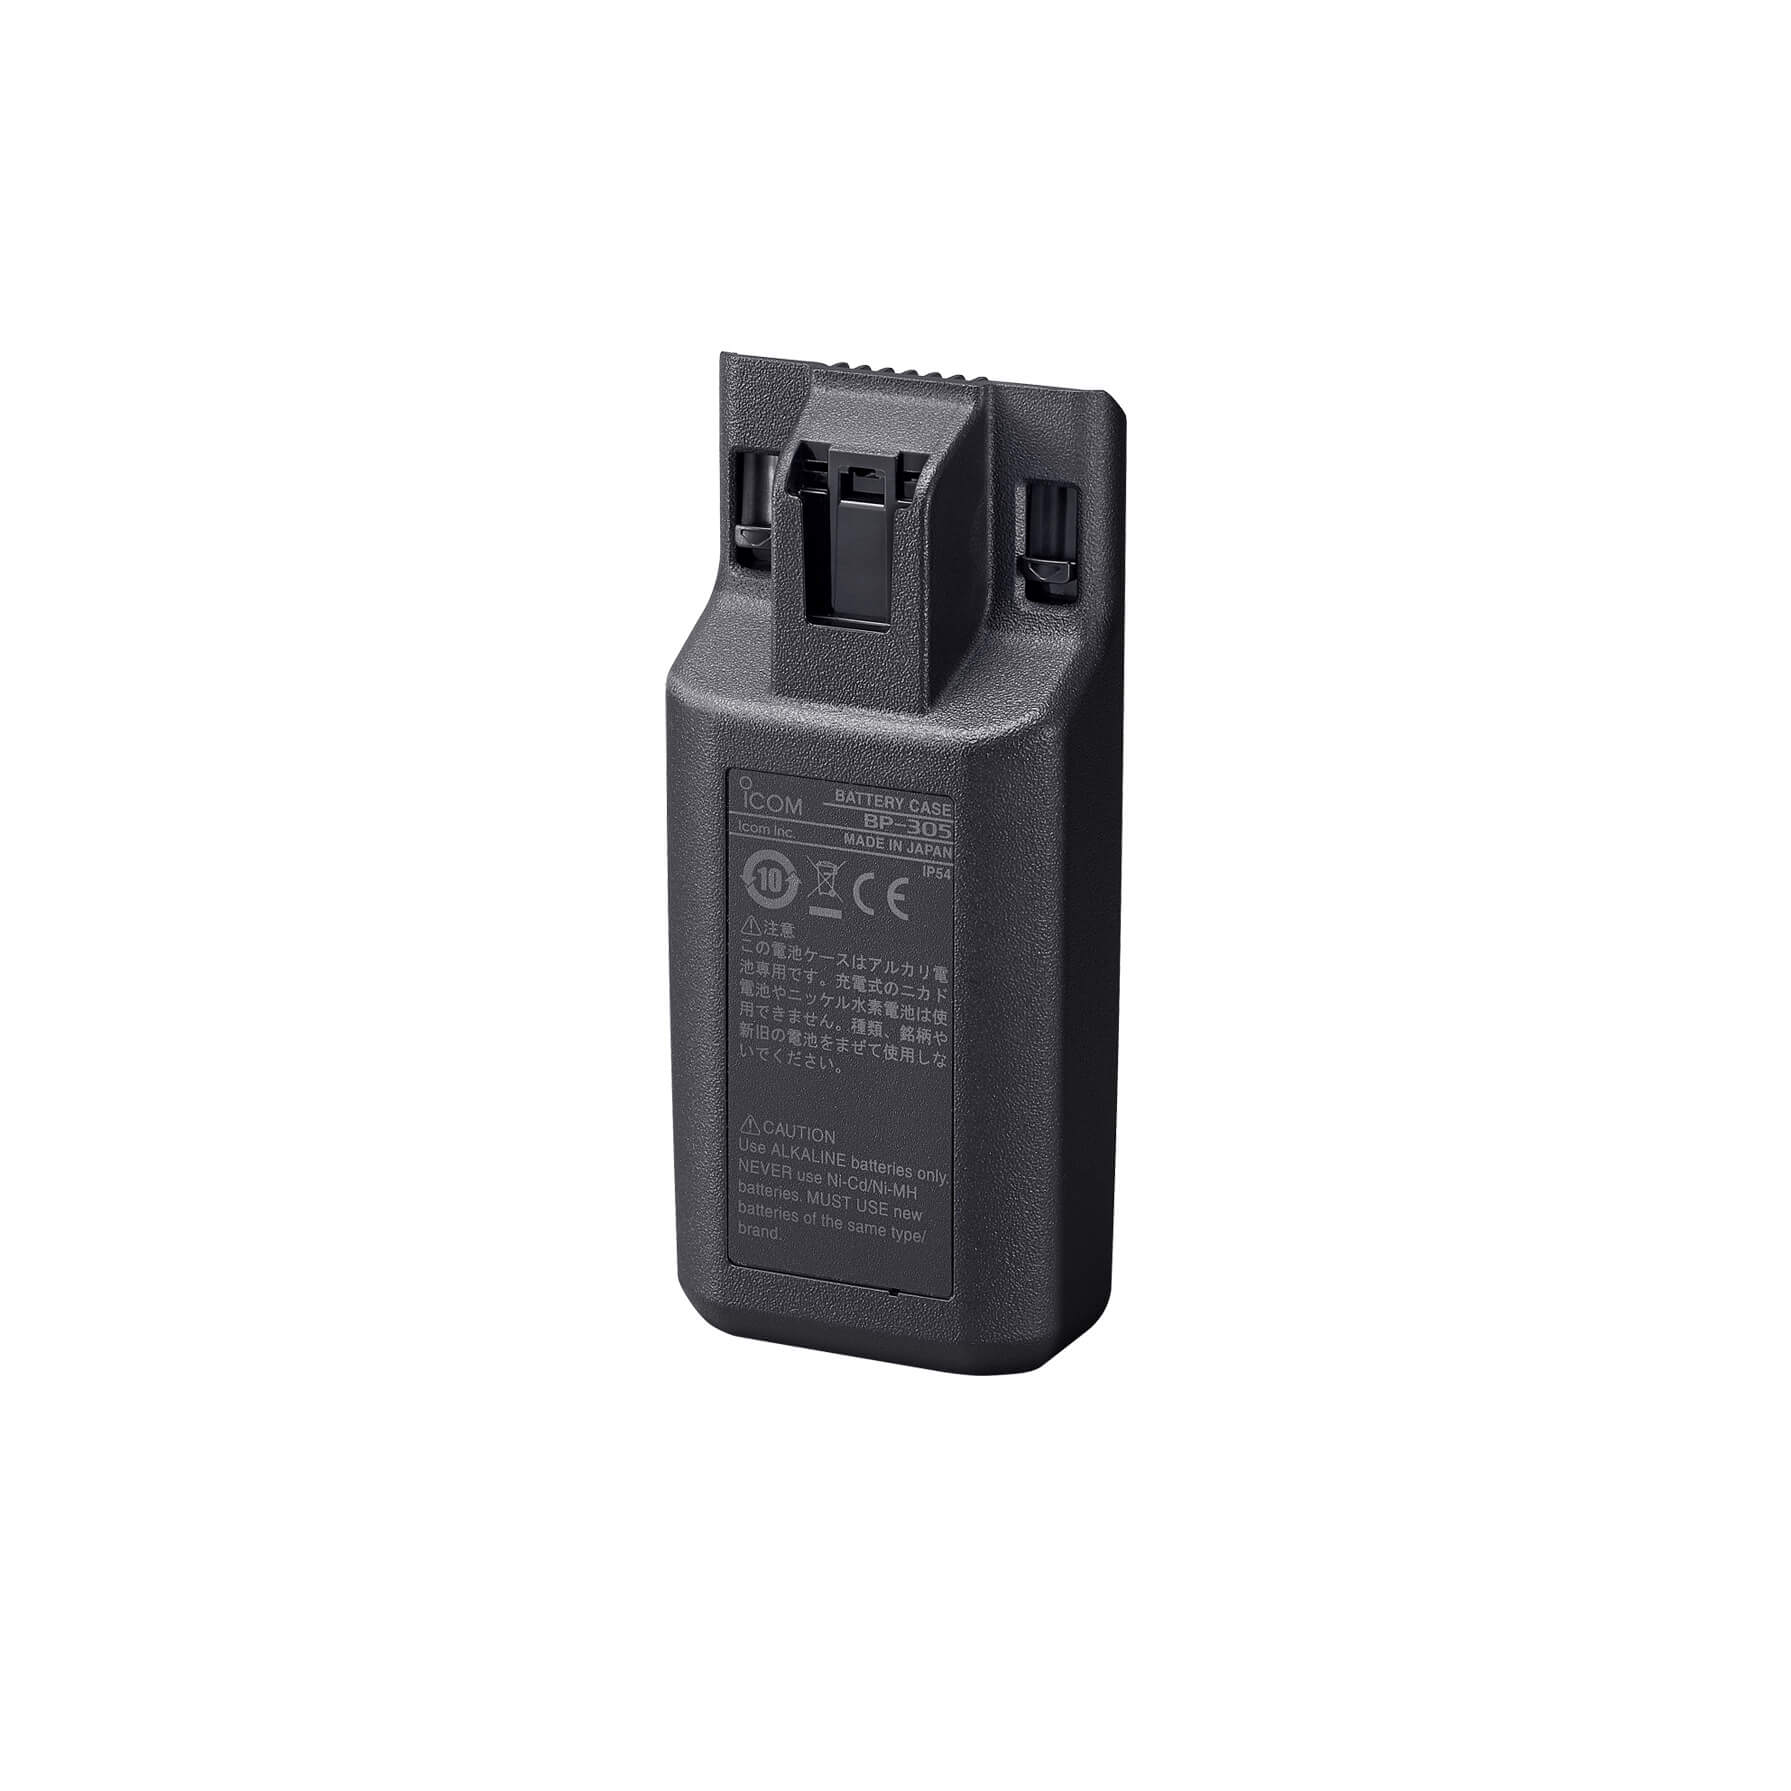 ICOM BP-305 battery case - D2N